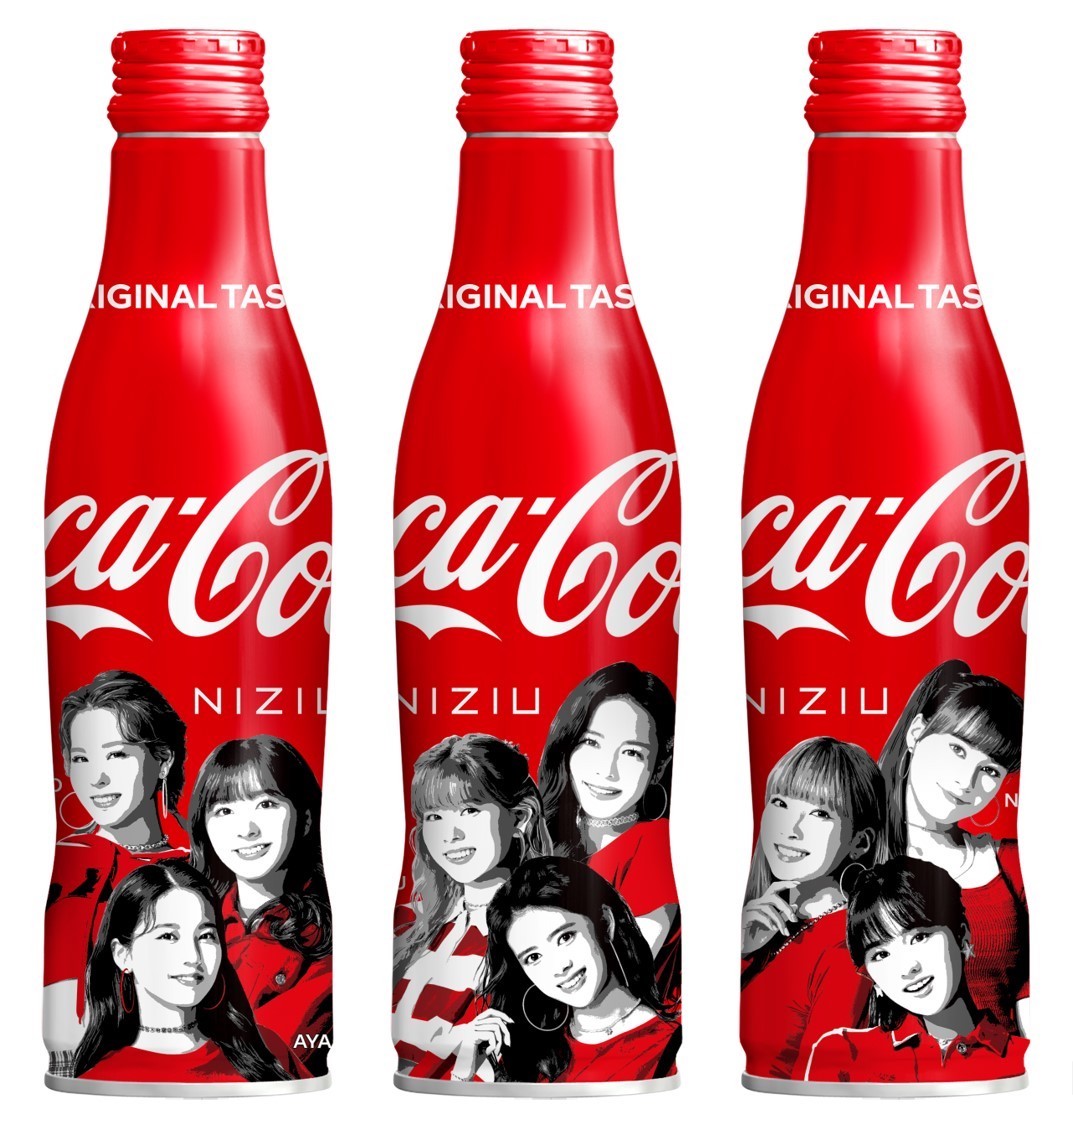 Niziuのオリジナルデザインボトルが登場 コカ コーラ スリムボトル Niziuデザイン が全国で発売 Spice エンタメ特化型情報メディア スパイス